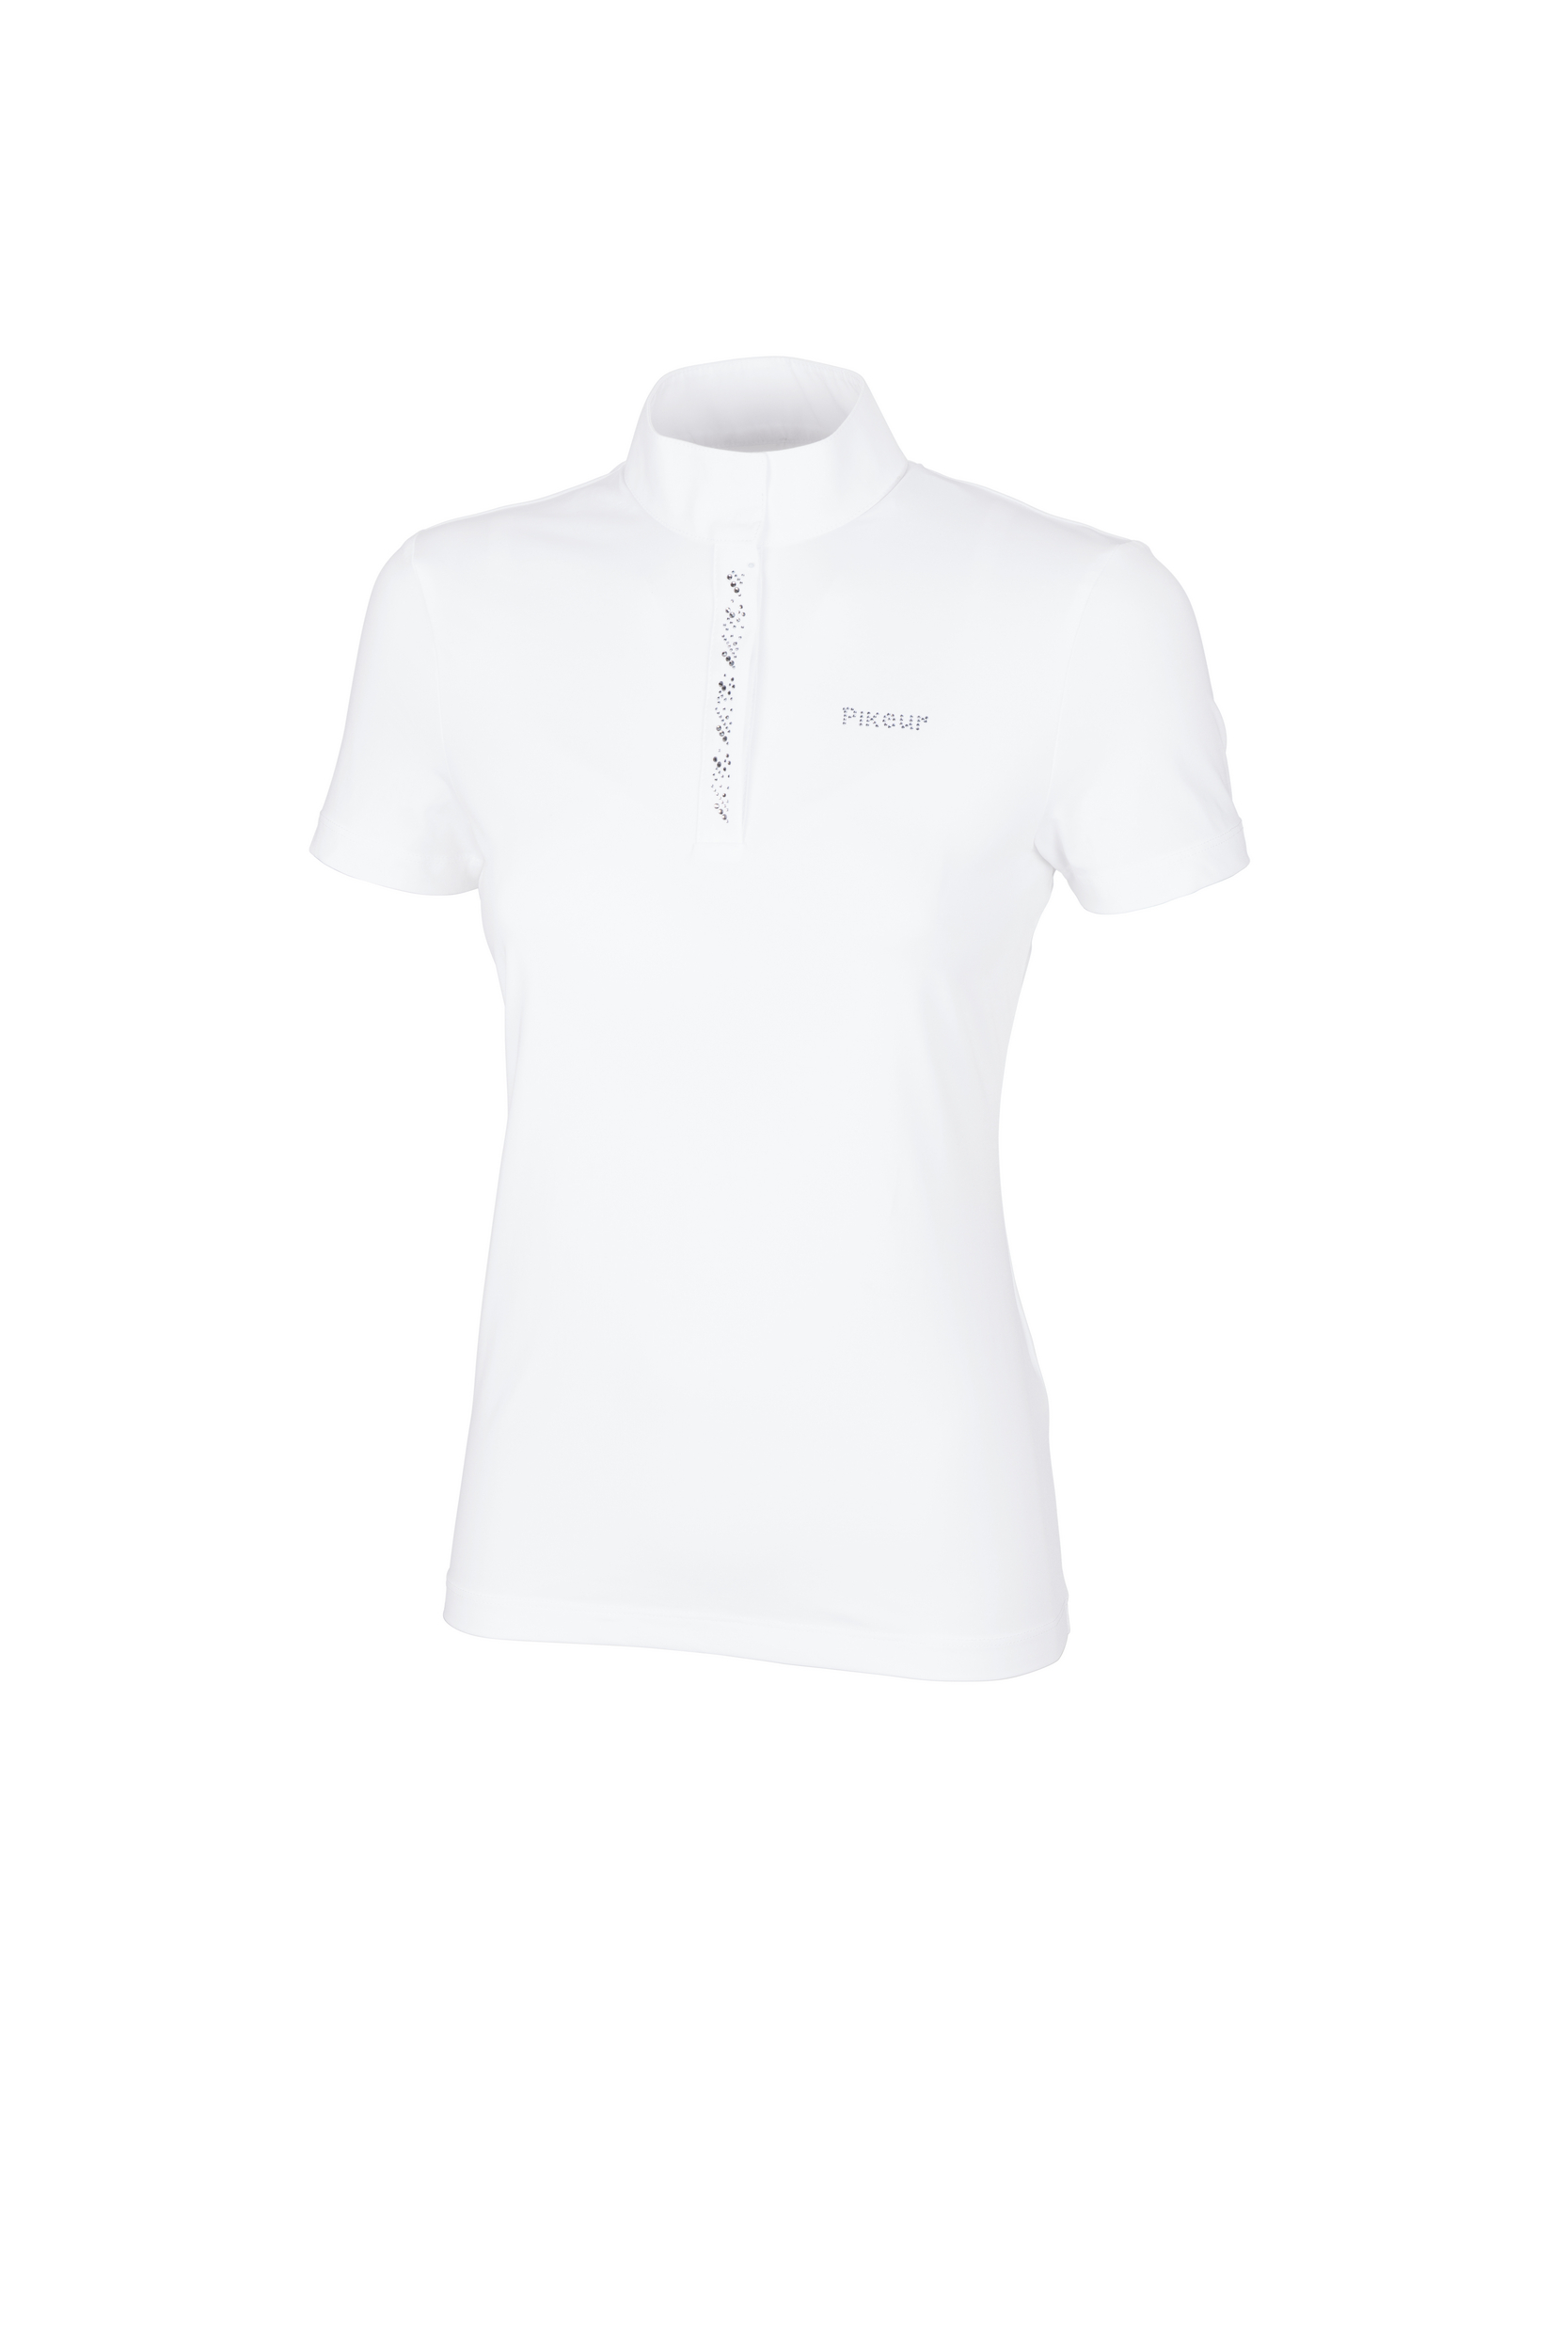 Pikeur Competition Shirt - Valkoinen (46)